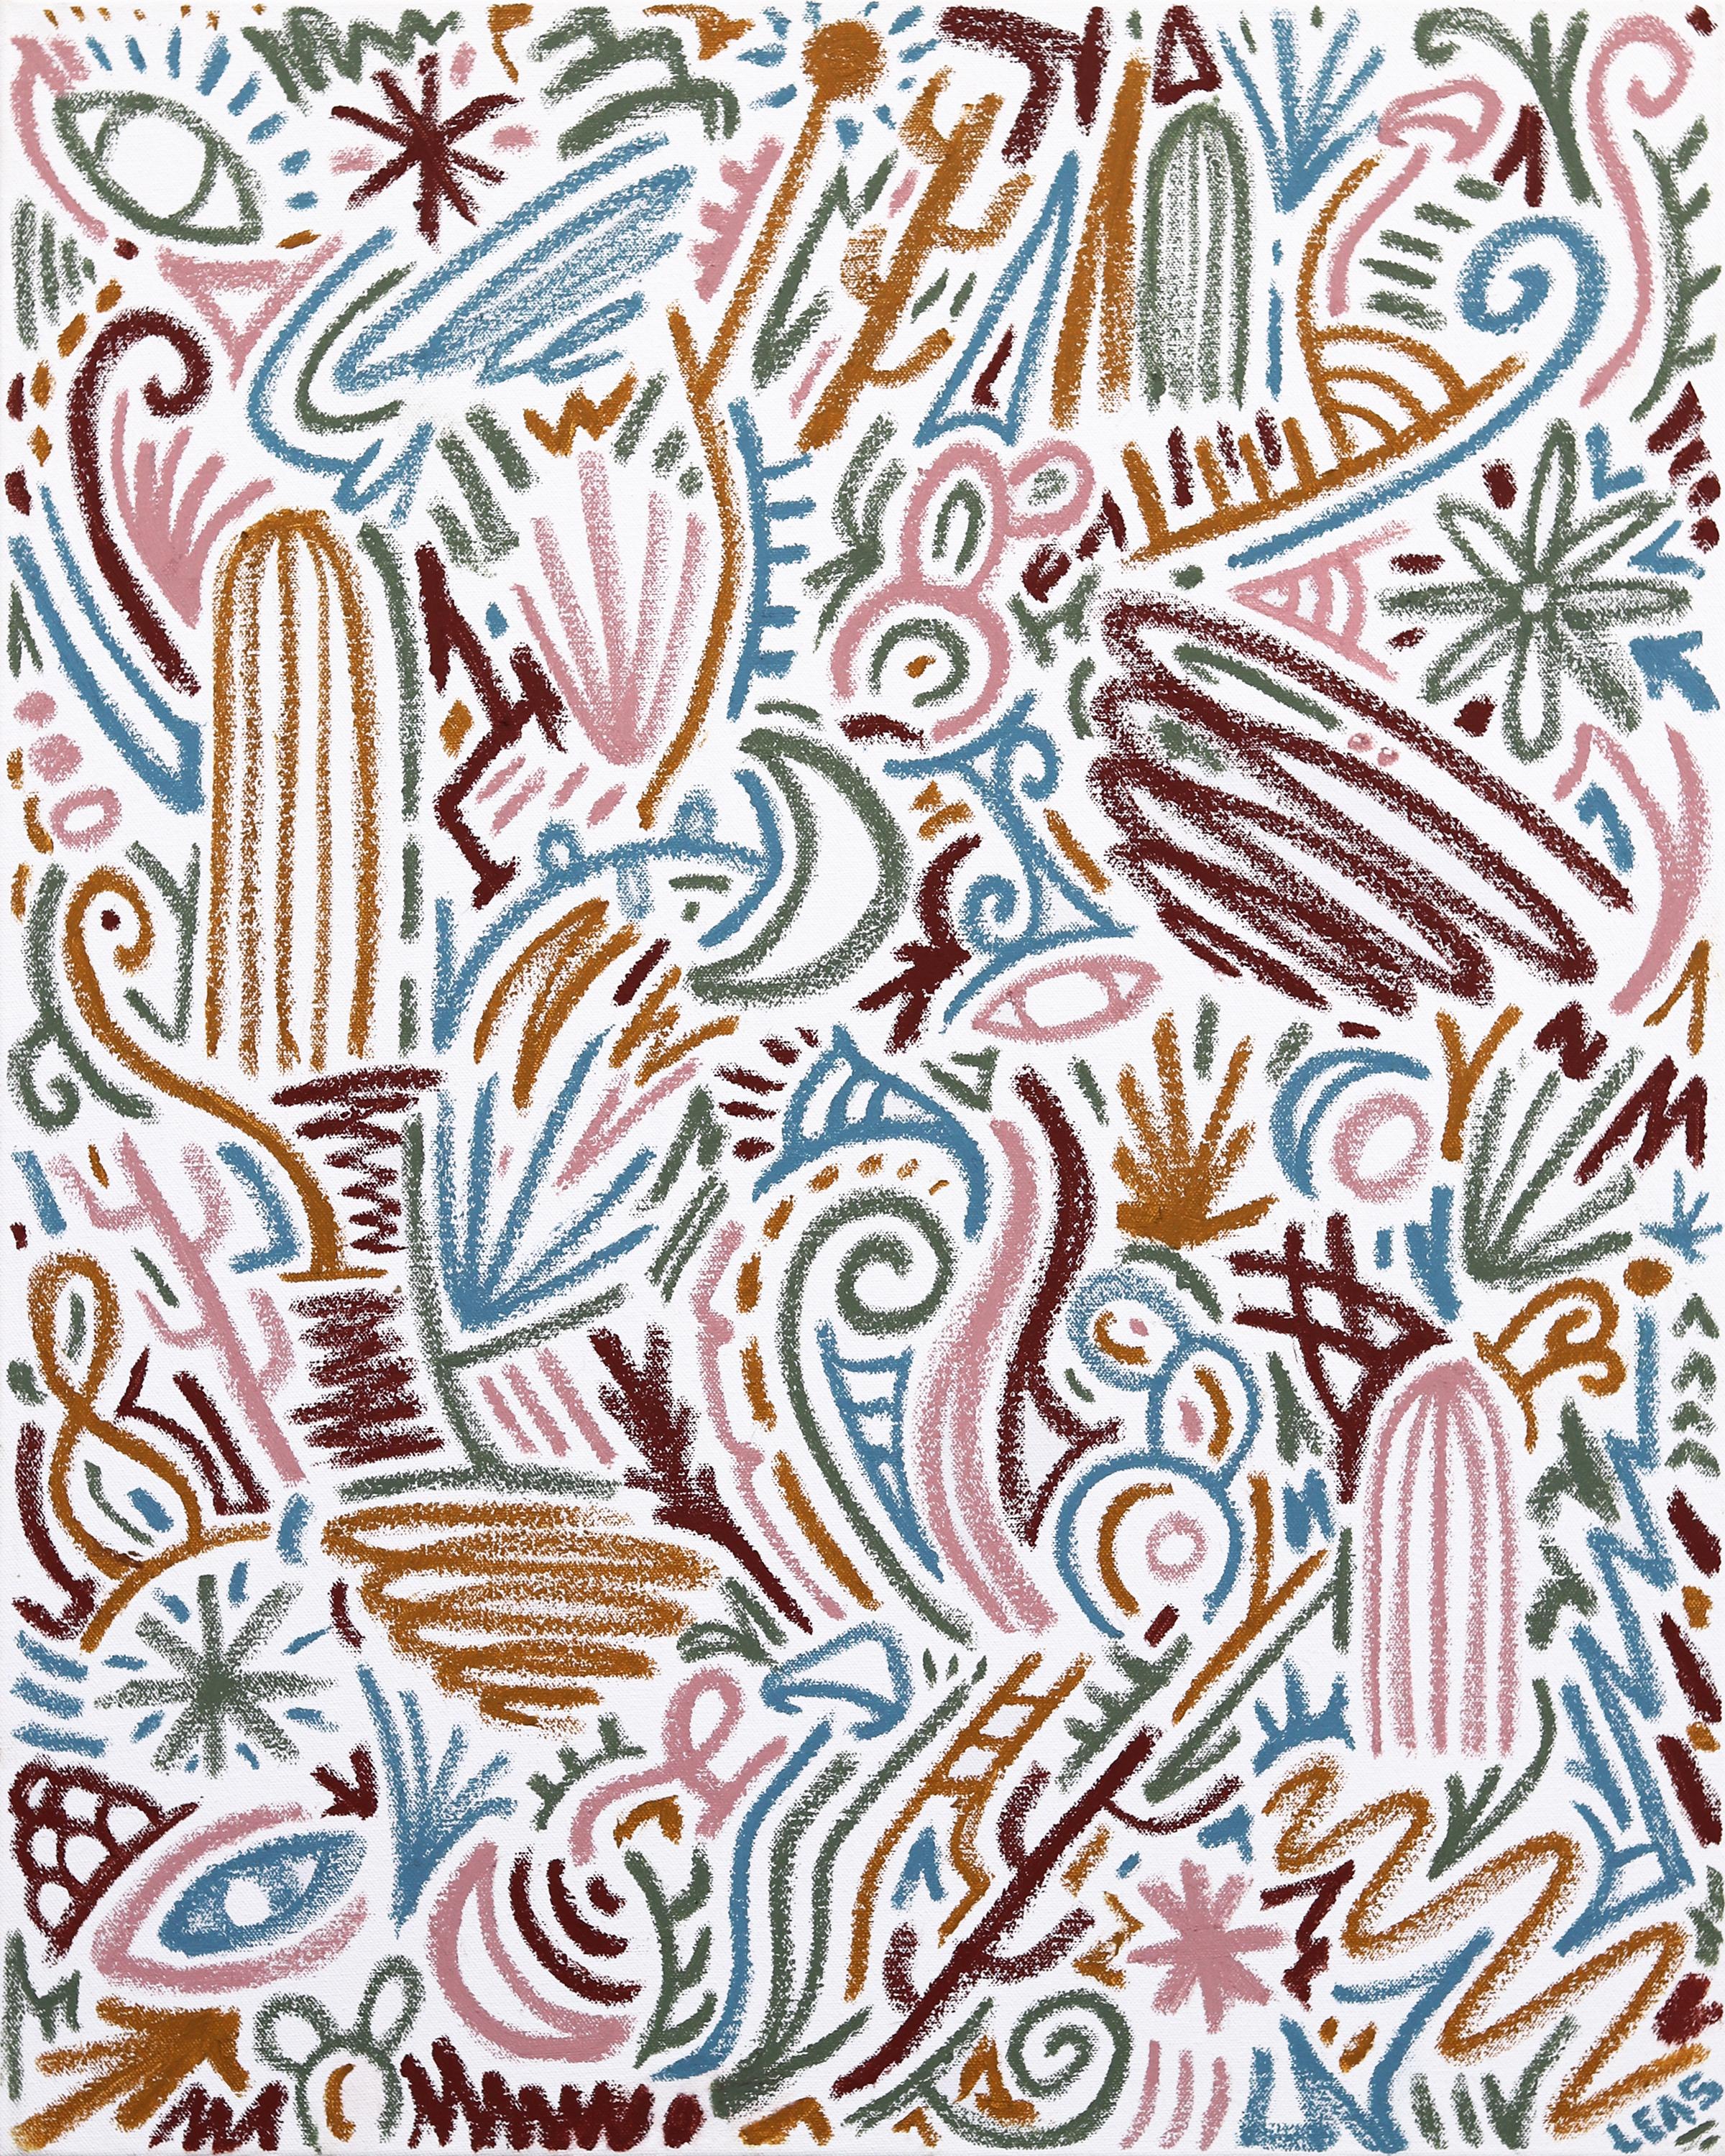 Ilan Leas Abstract Painting – Aerial Magic - Dynamik Linear Design Composition Aborigine inspiriertes Gemälde